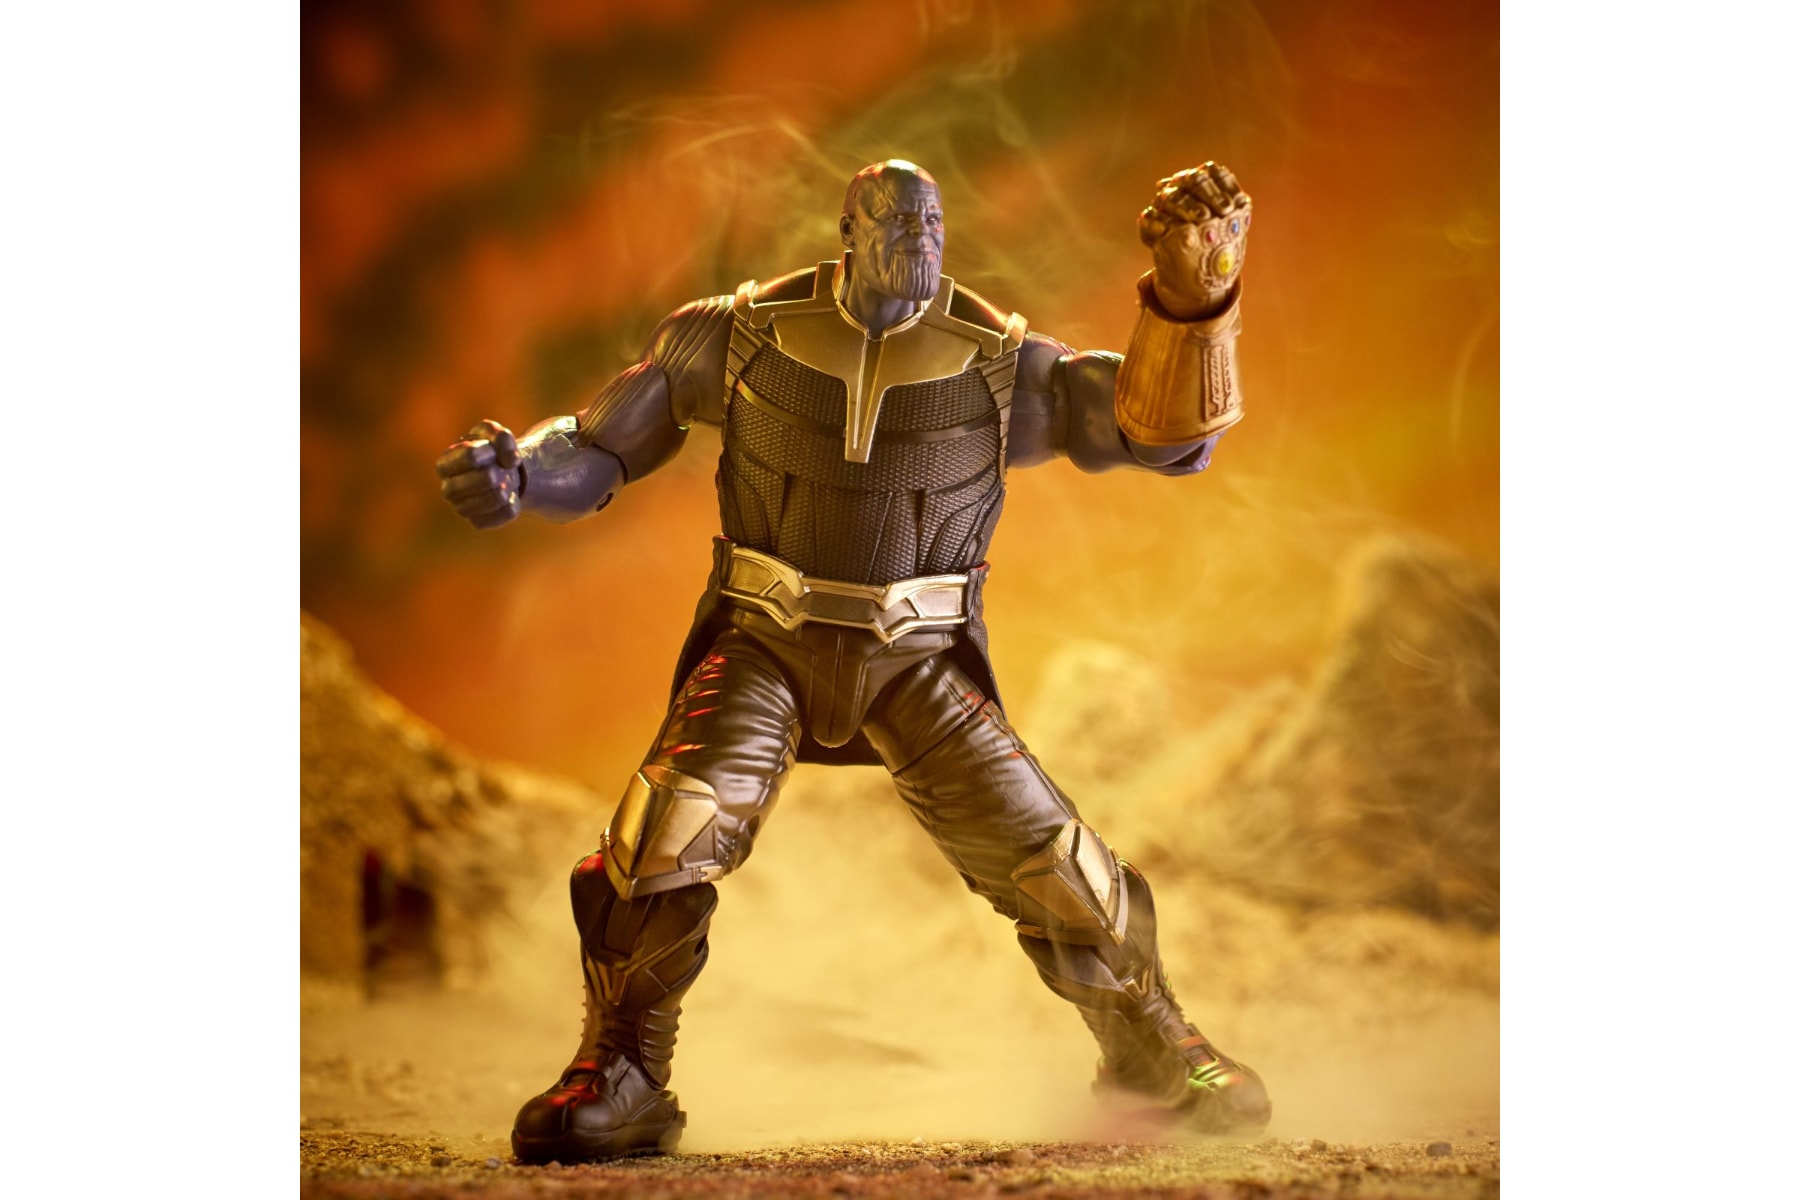 Hasbro Avengers: Infinity War Reveal Captain America Iron Man Iron Spider Proxima Midnight Thanos Spider Man Thor Black Widow Cull Obsidian Ant-Man Wasp